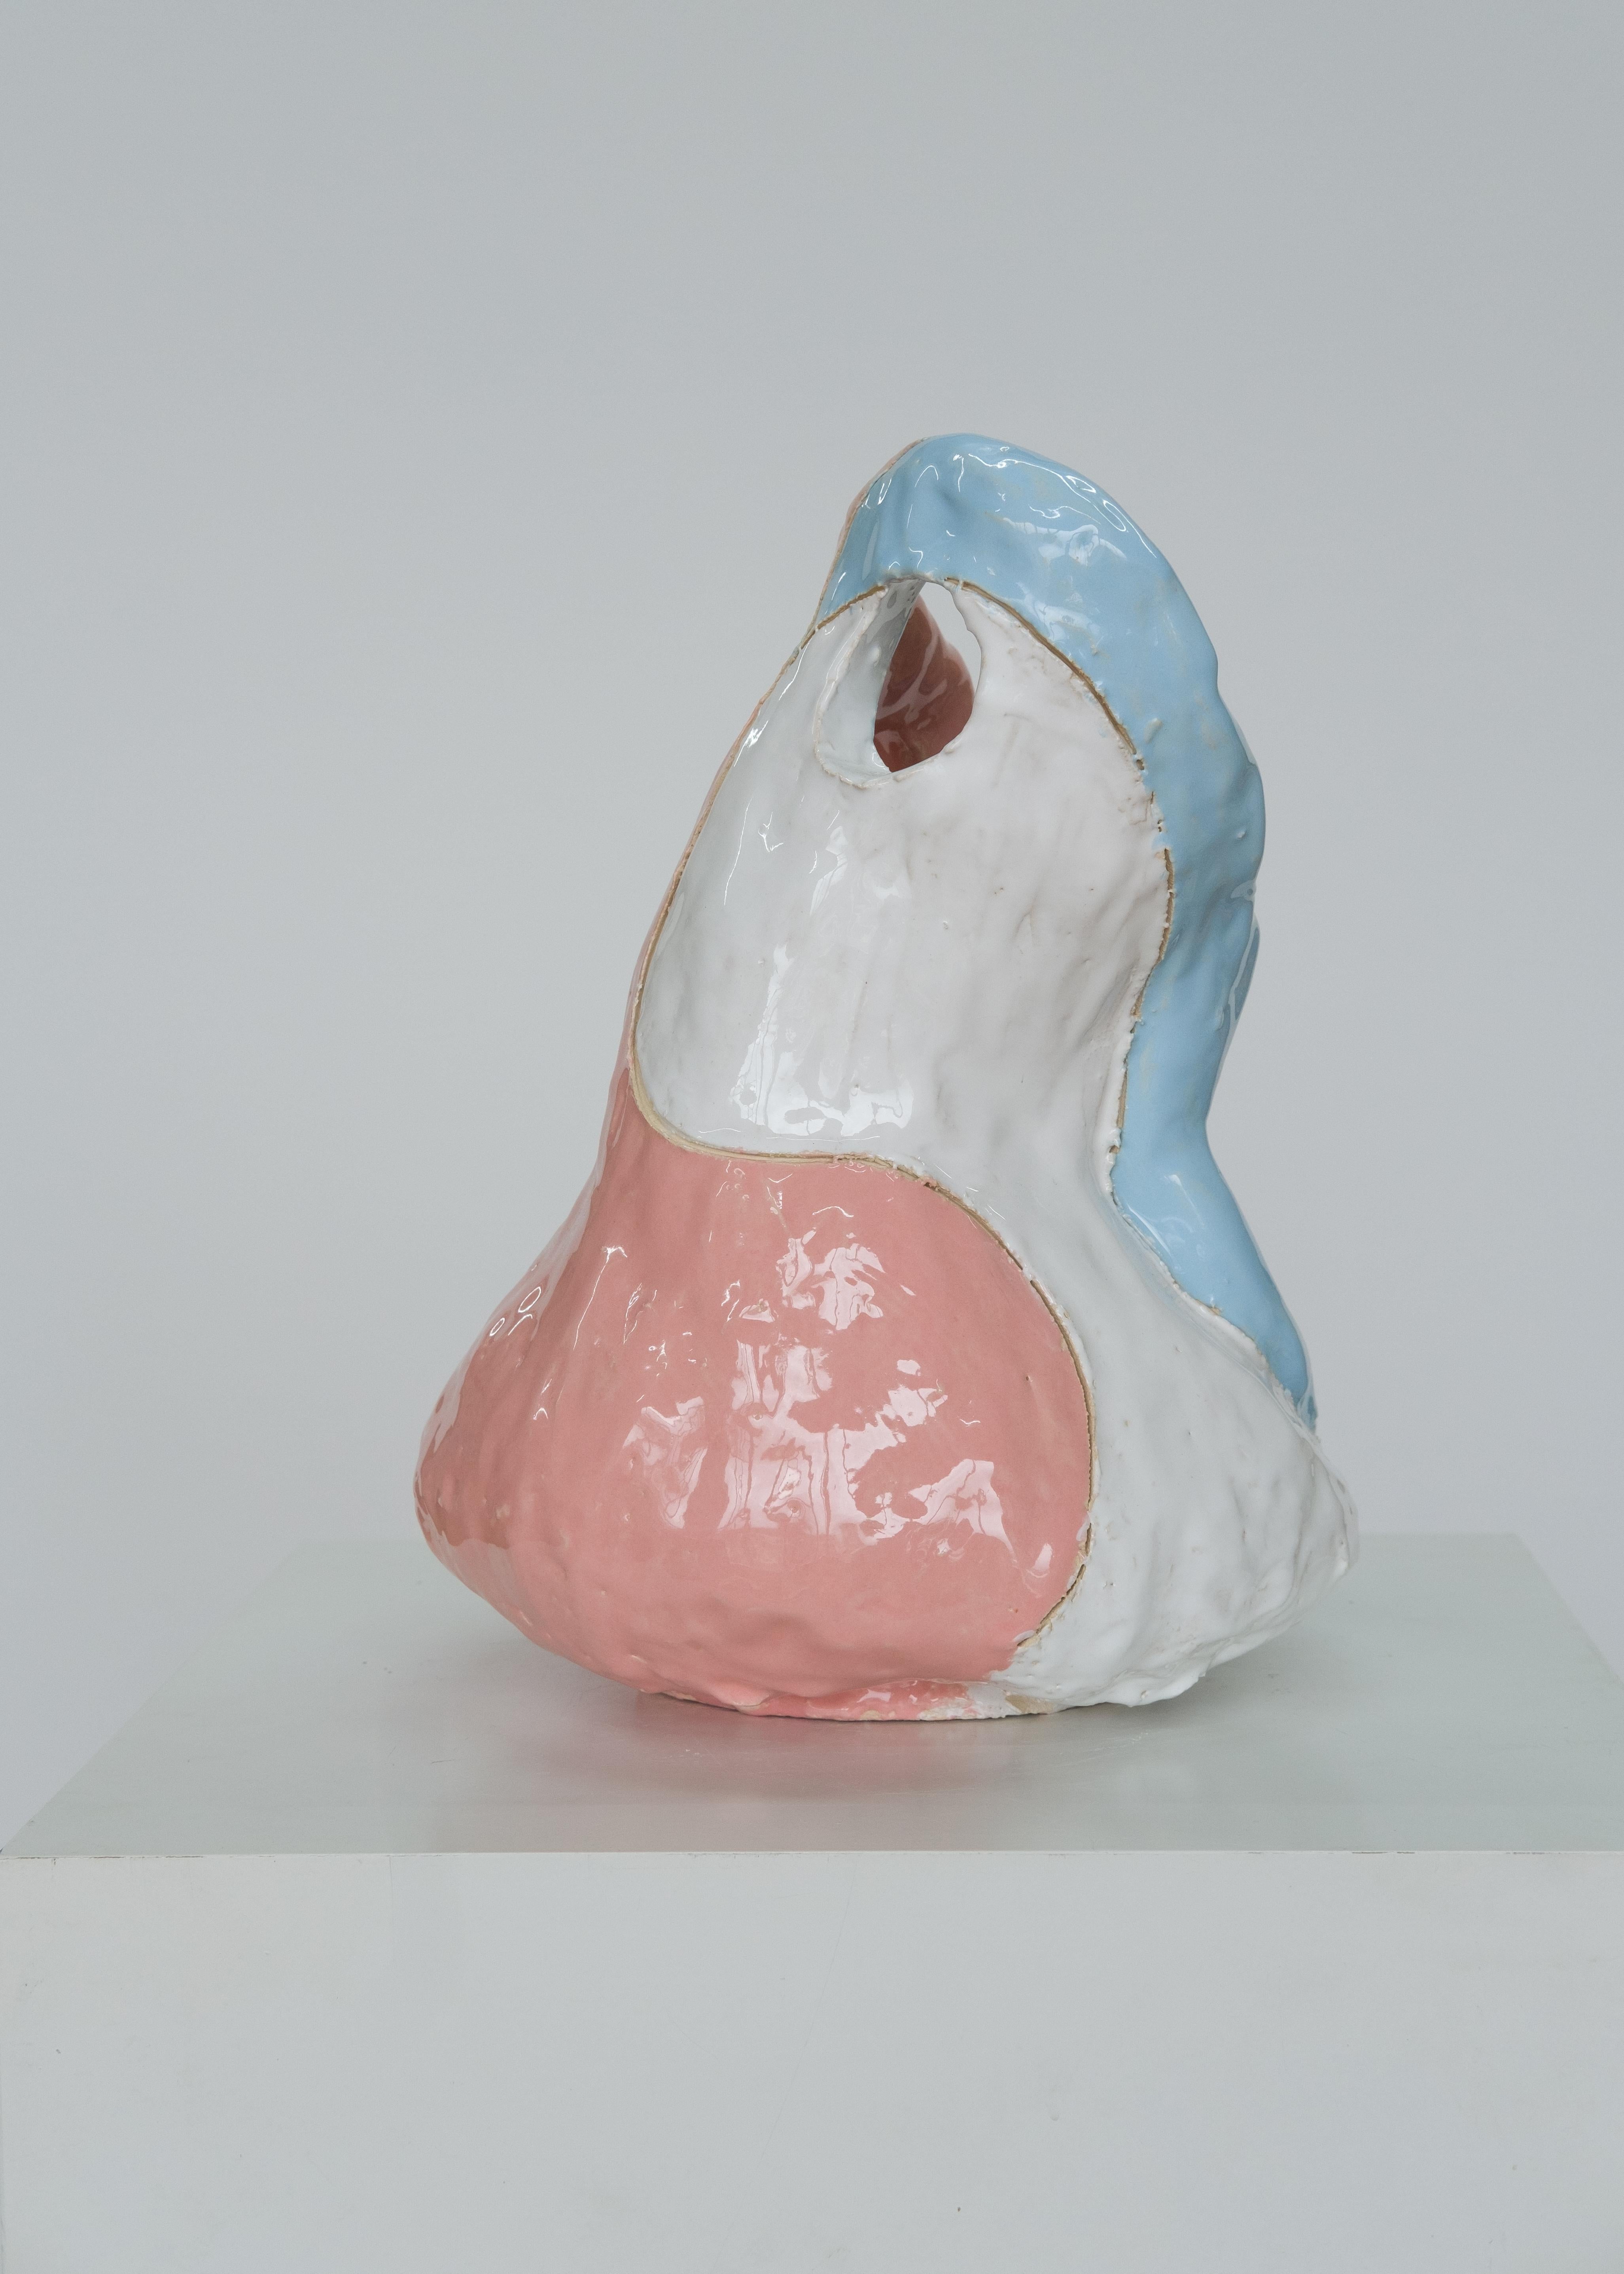 Marliz Frencken, Untitled, ceramics (figurative, abstract, sculpture, vase) For Sale 1